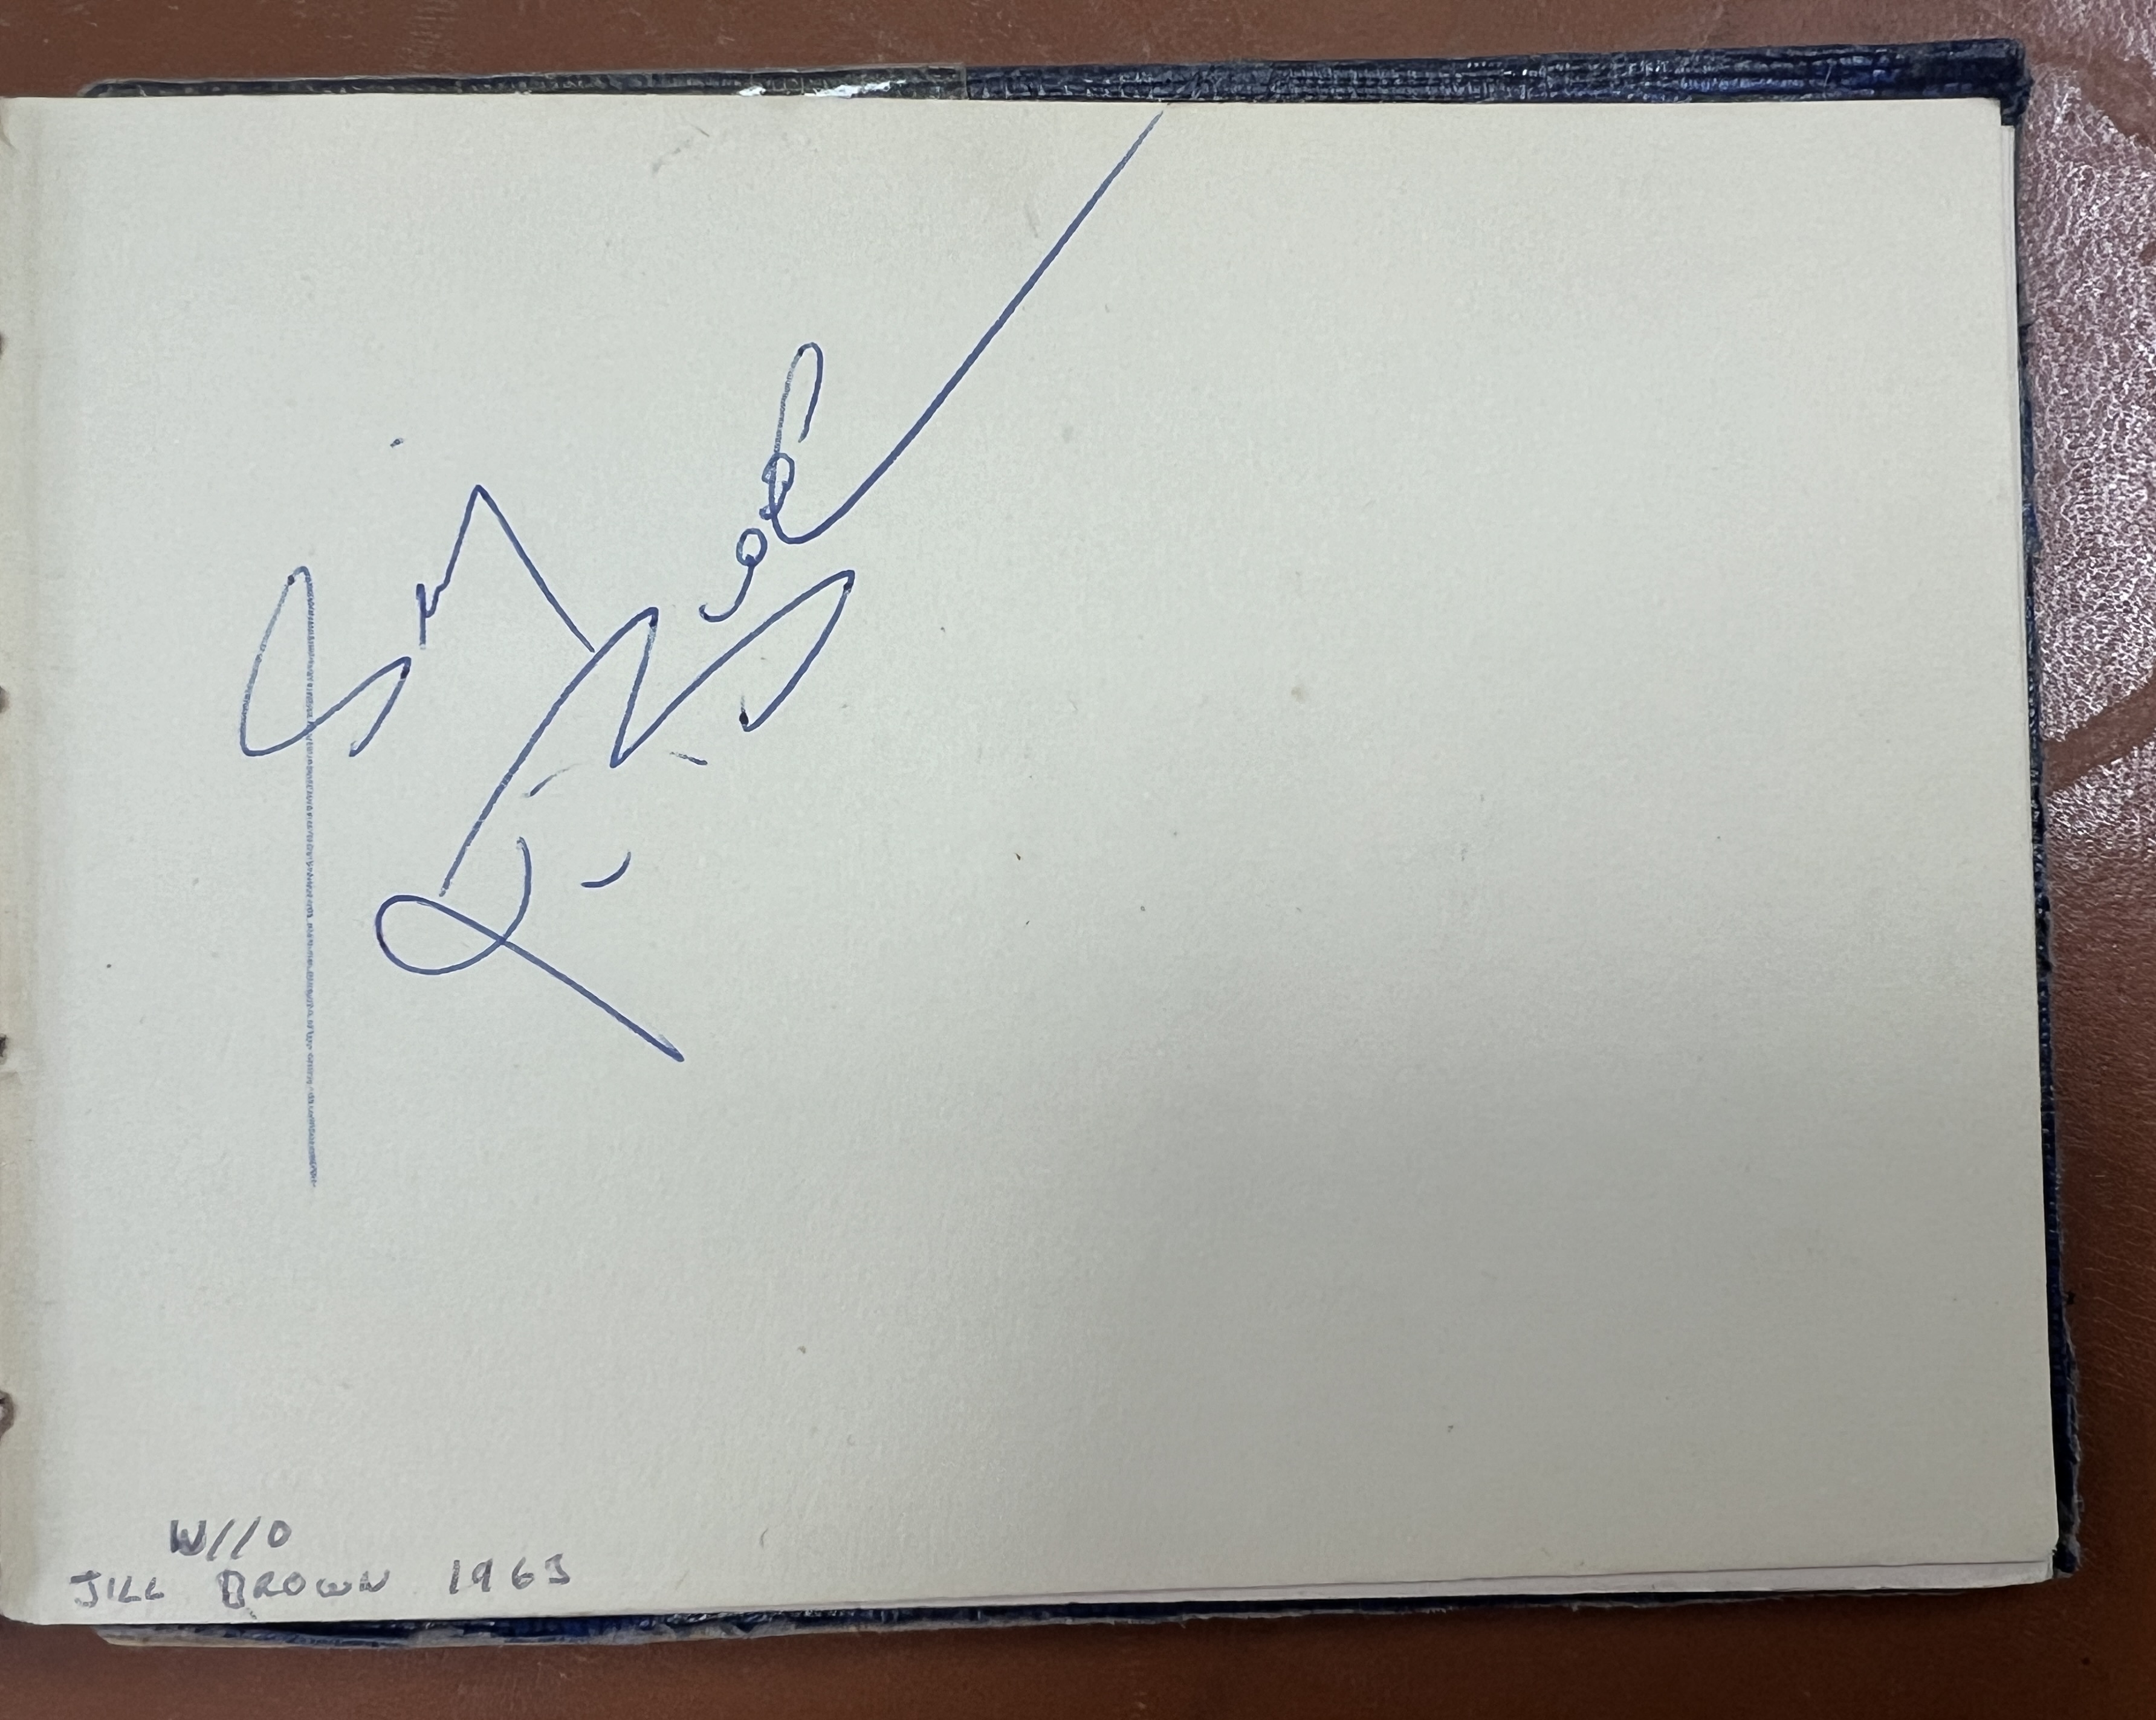 A 1960's autograph album containing autographs of various celebrities including Cliff Richard